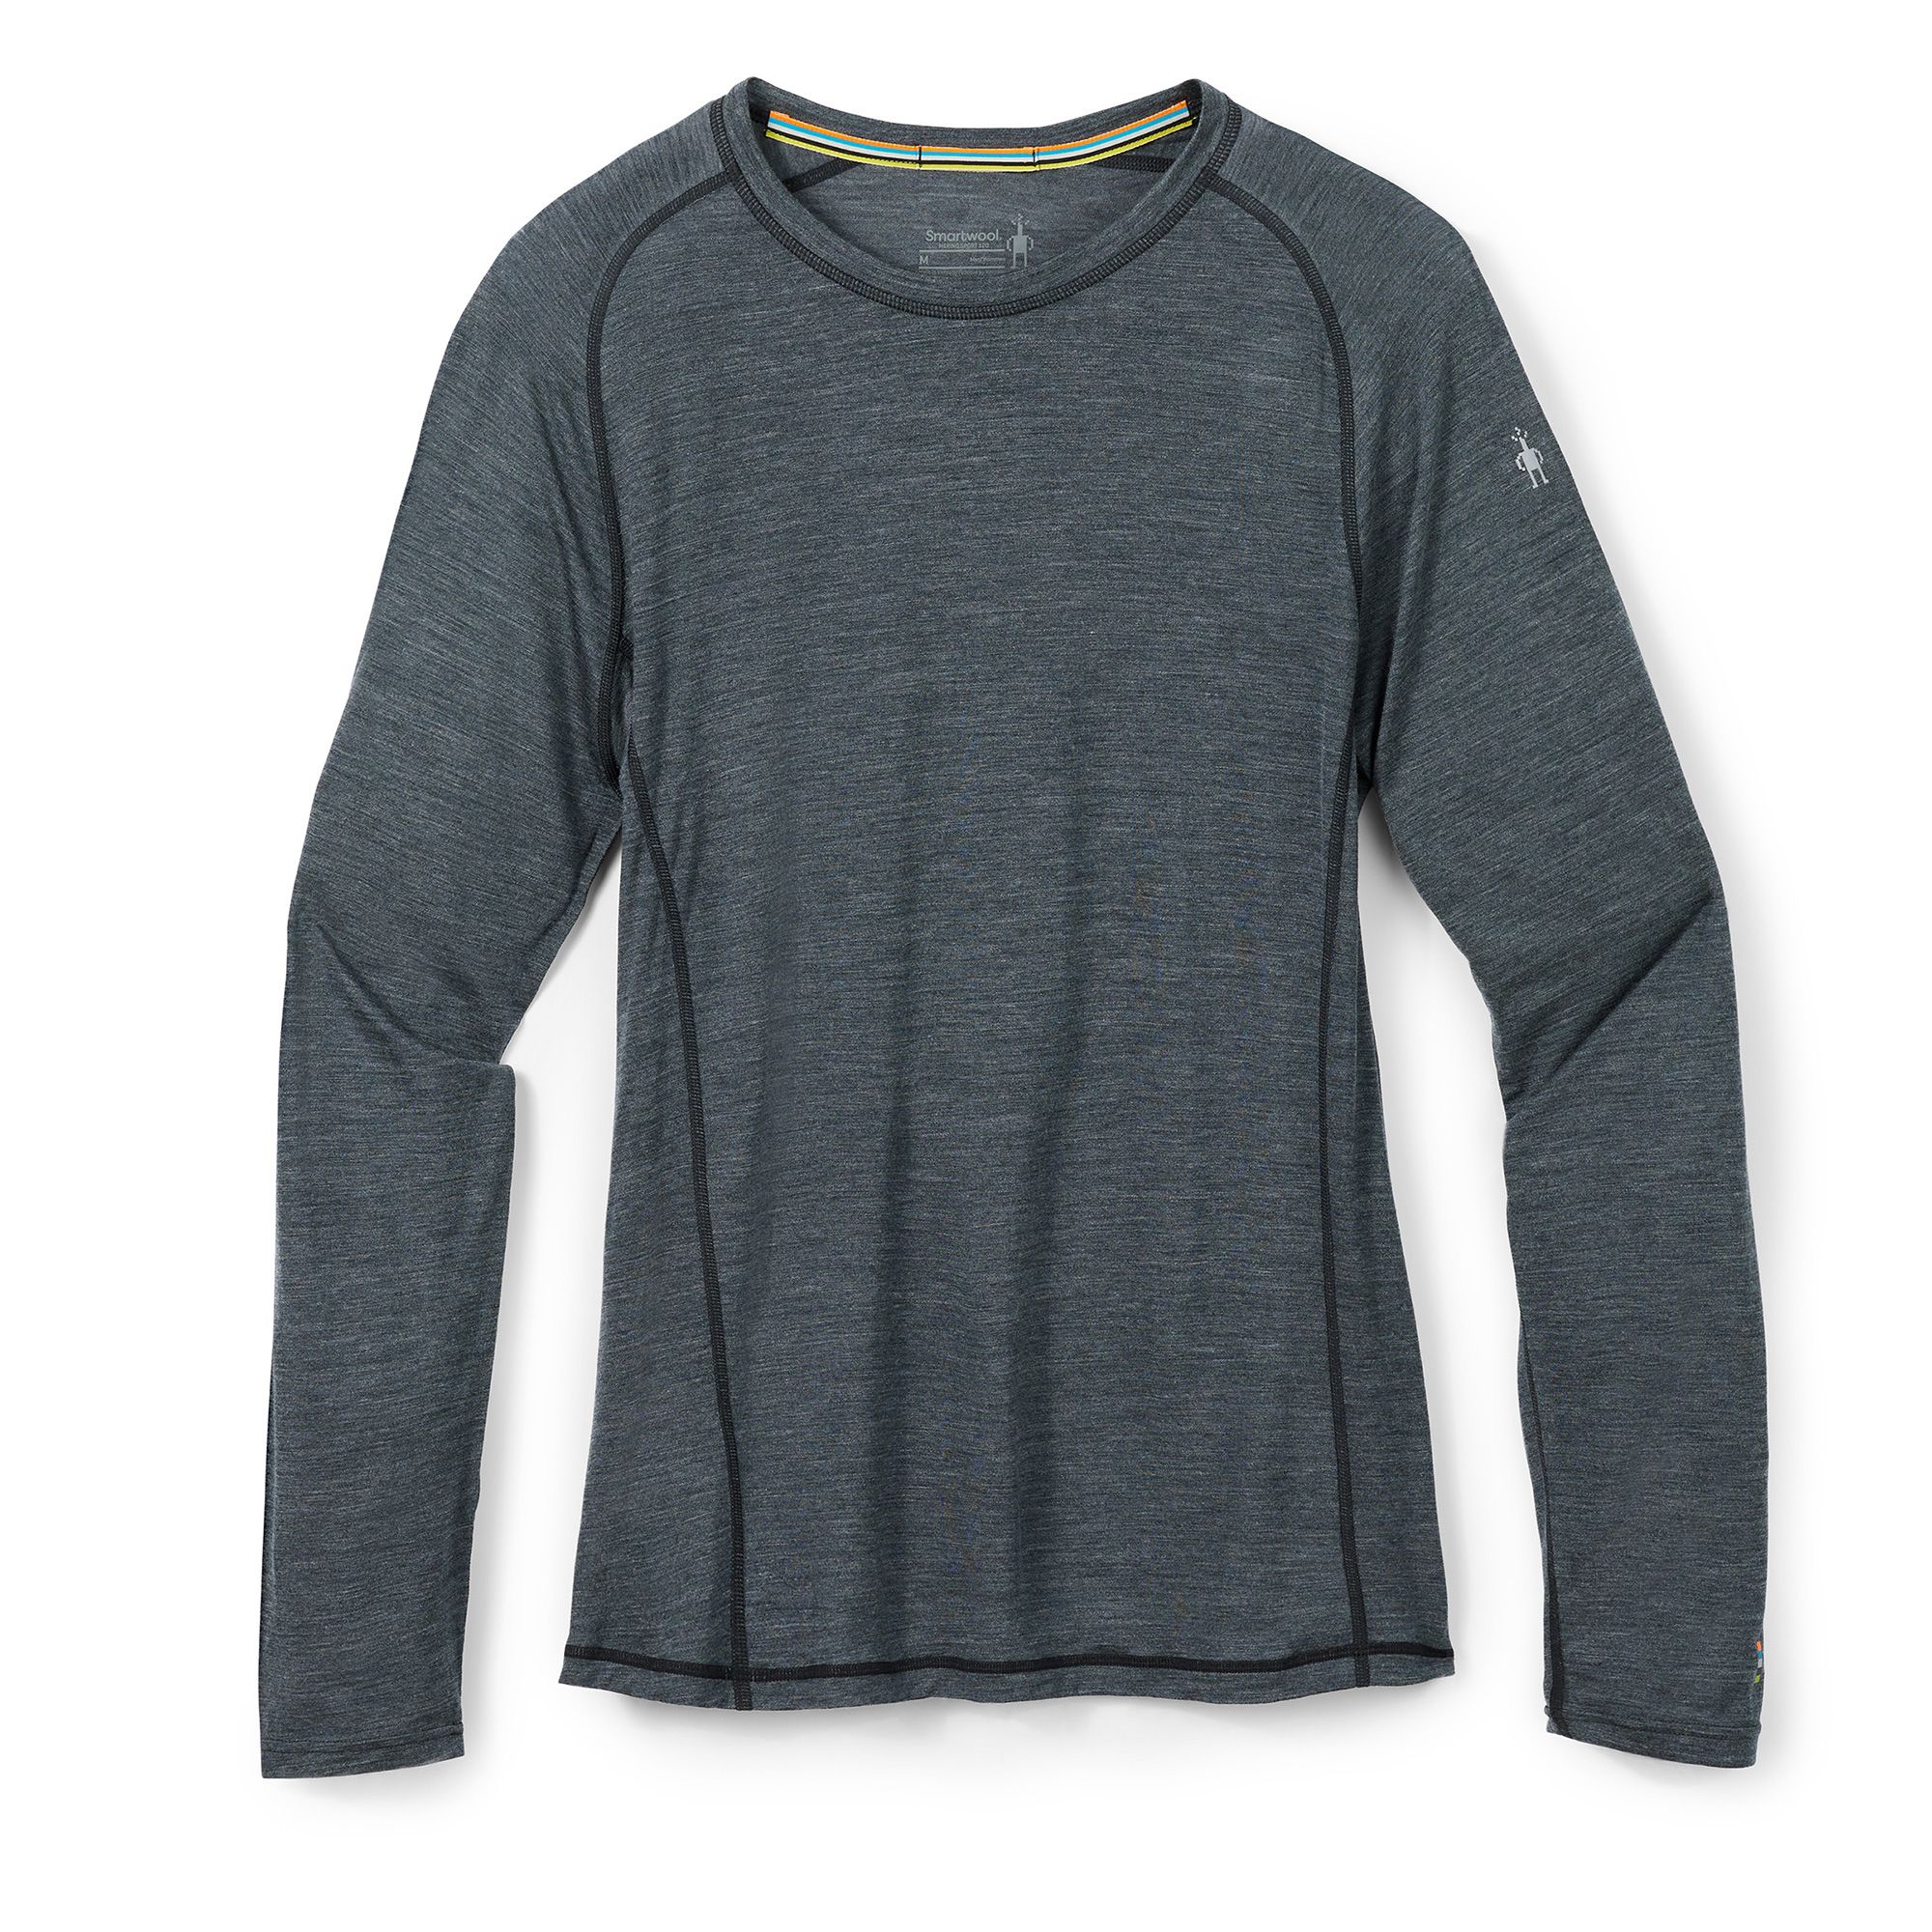 SHEEP RUN 100% Merino Wool Men's Wicking Breathable Base Layer Hiking  Running Long Sleeve Shirt